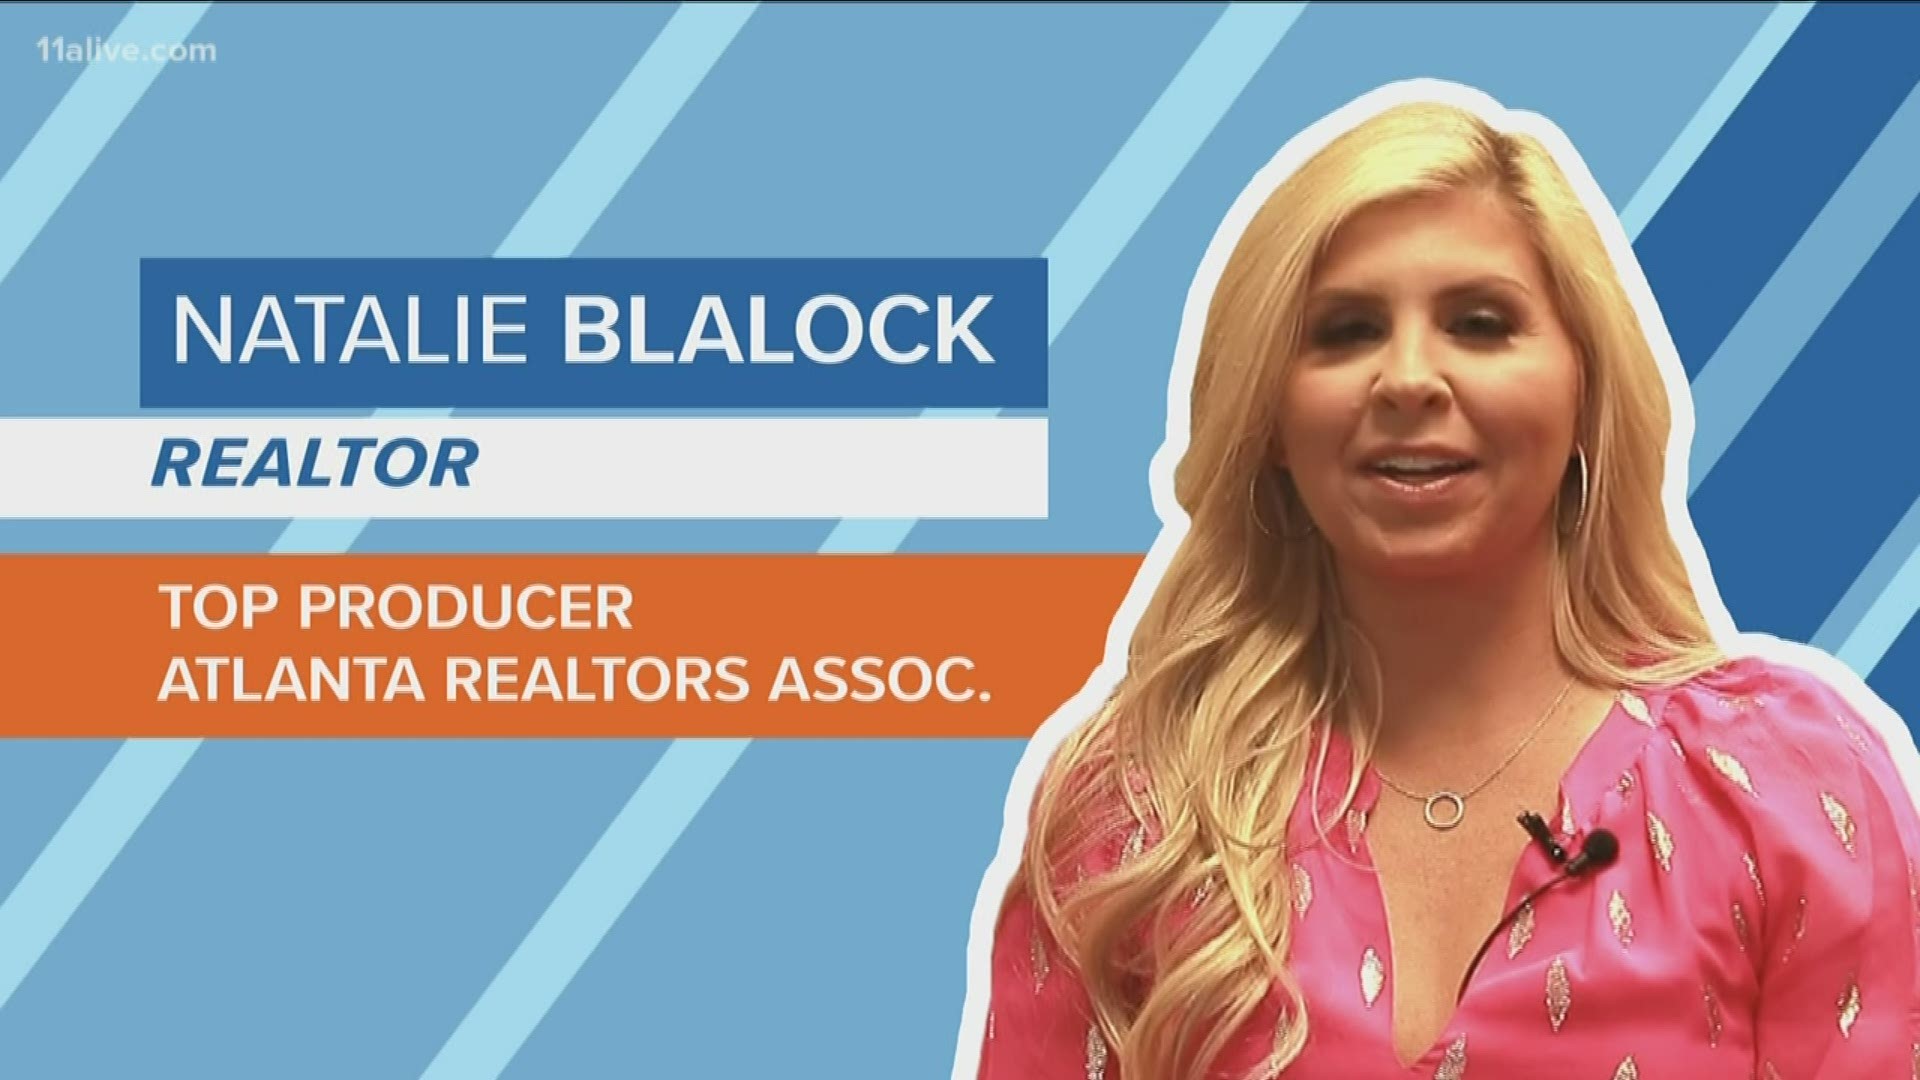 Atlanta realtor Natalie Blalock provides her pro tips for potential home sellers.